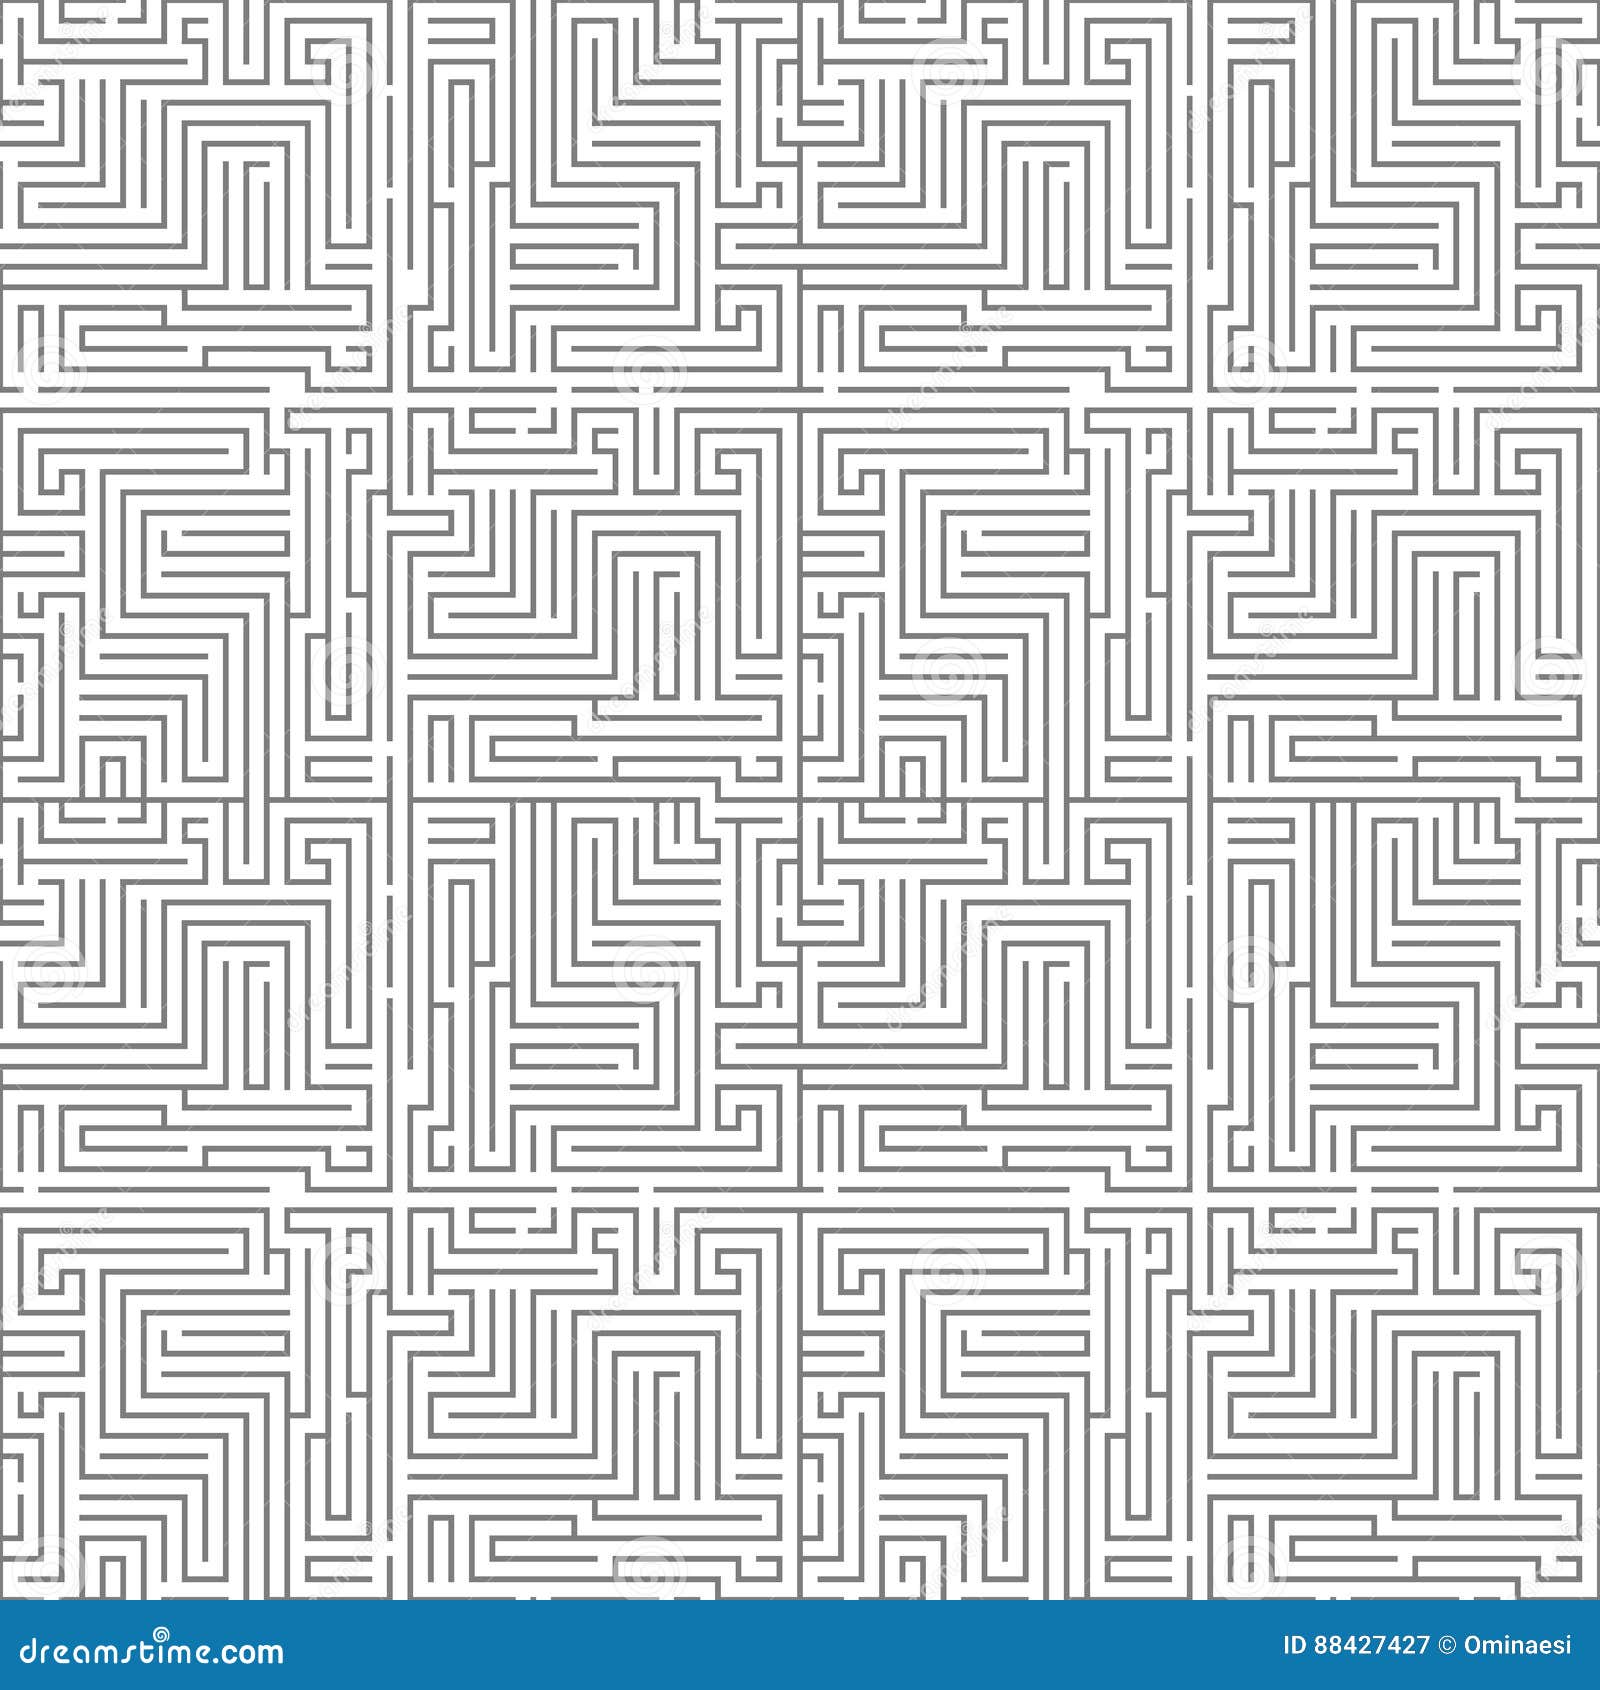 intricacy labyrinth maze seamless pattern background  template  